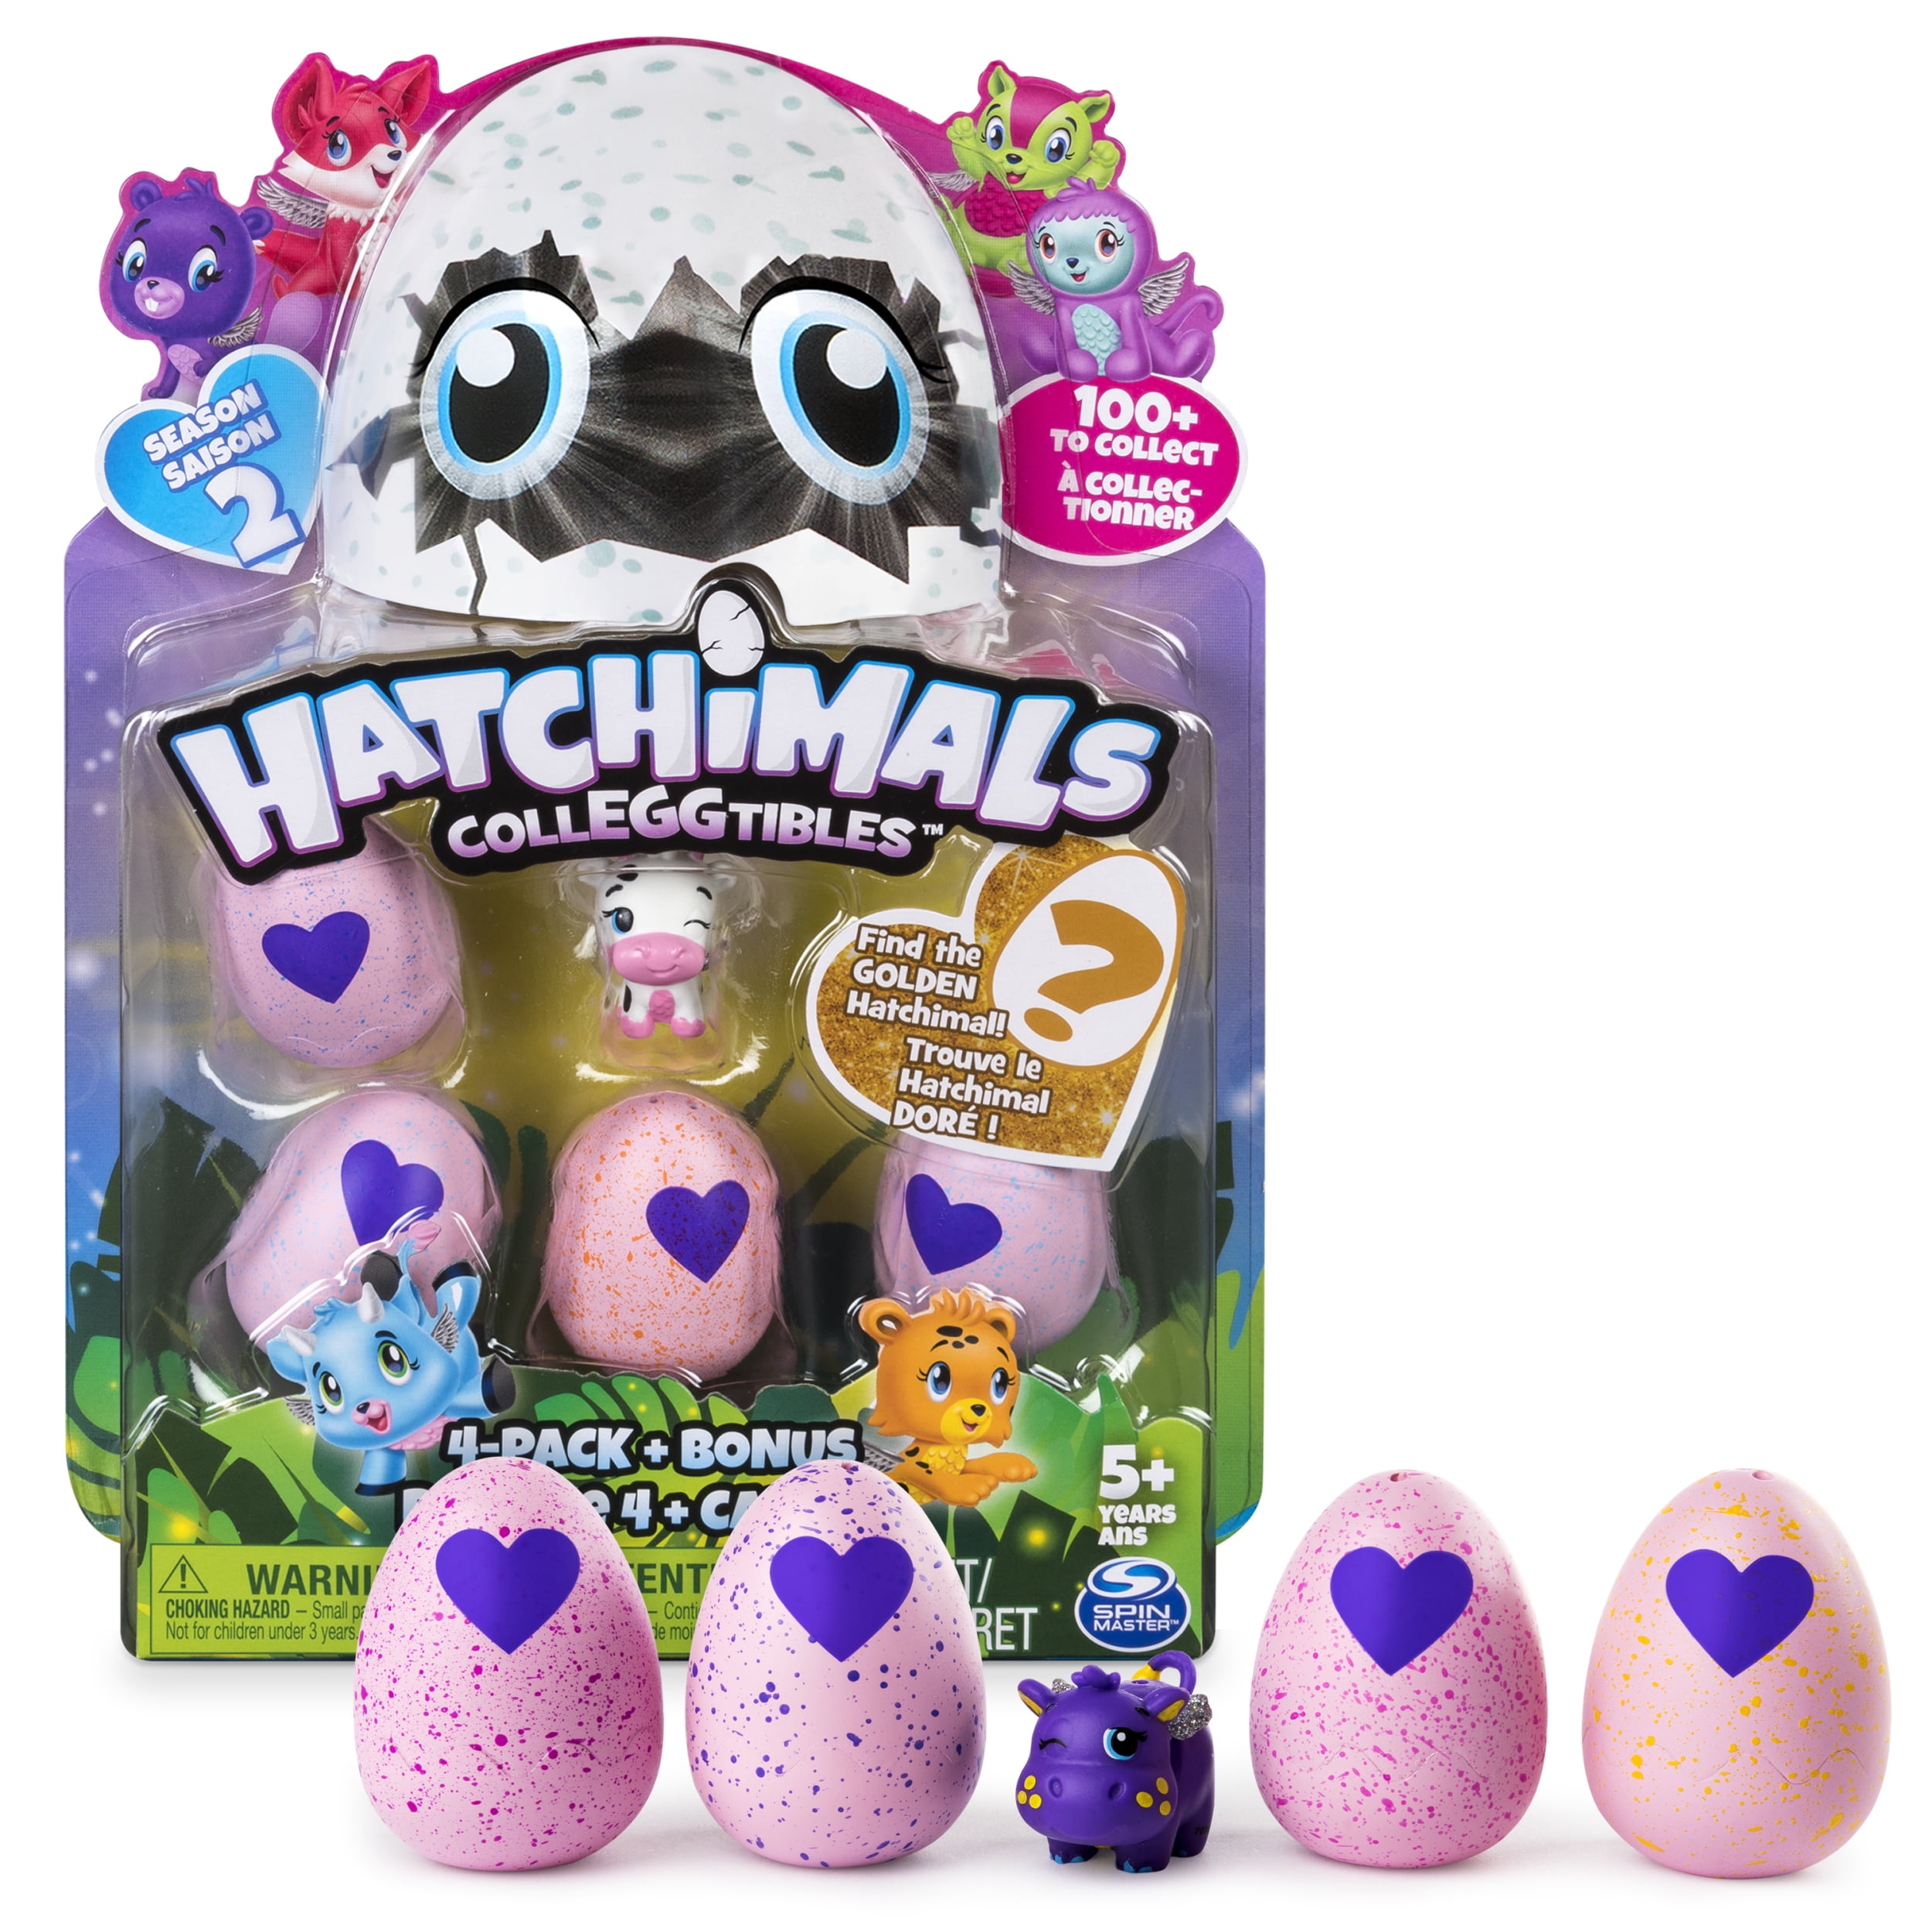 Hatchimal Colleggtible Season 1 Hatchimals Colleggtibles Mini 4 Pack Bonus 